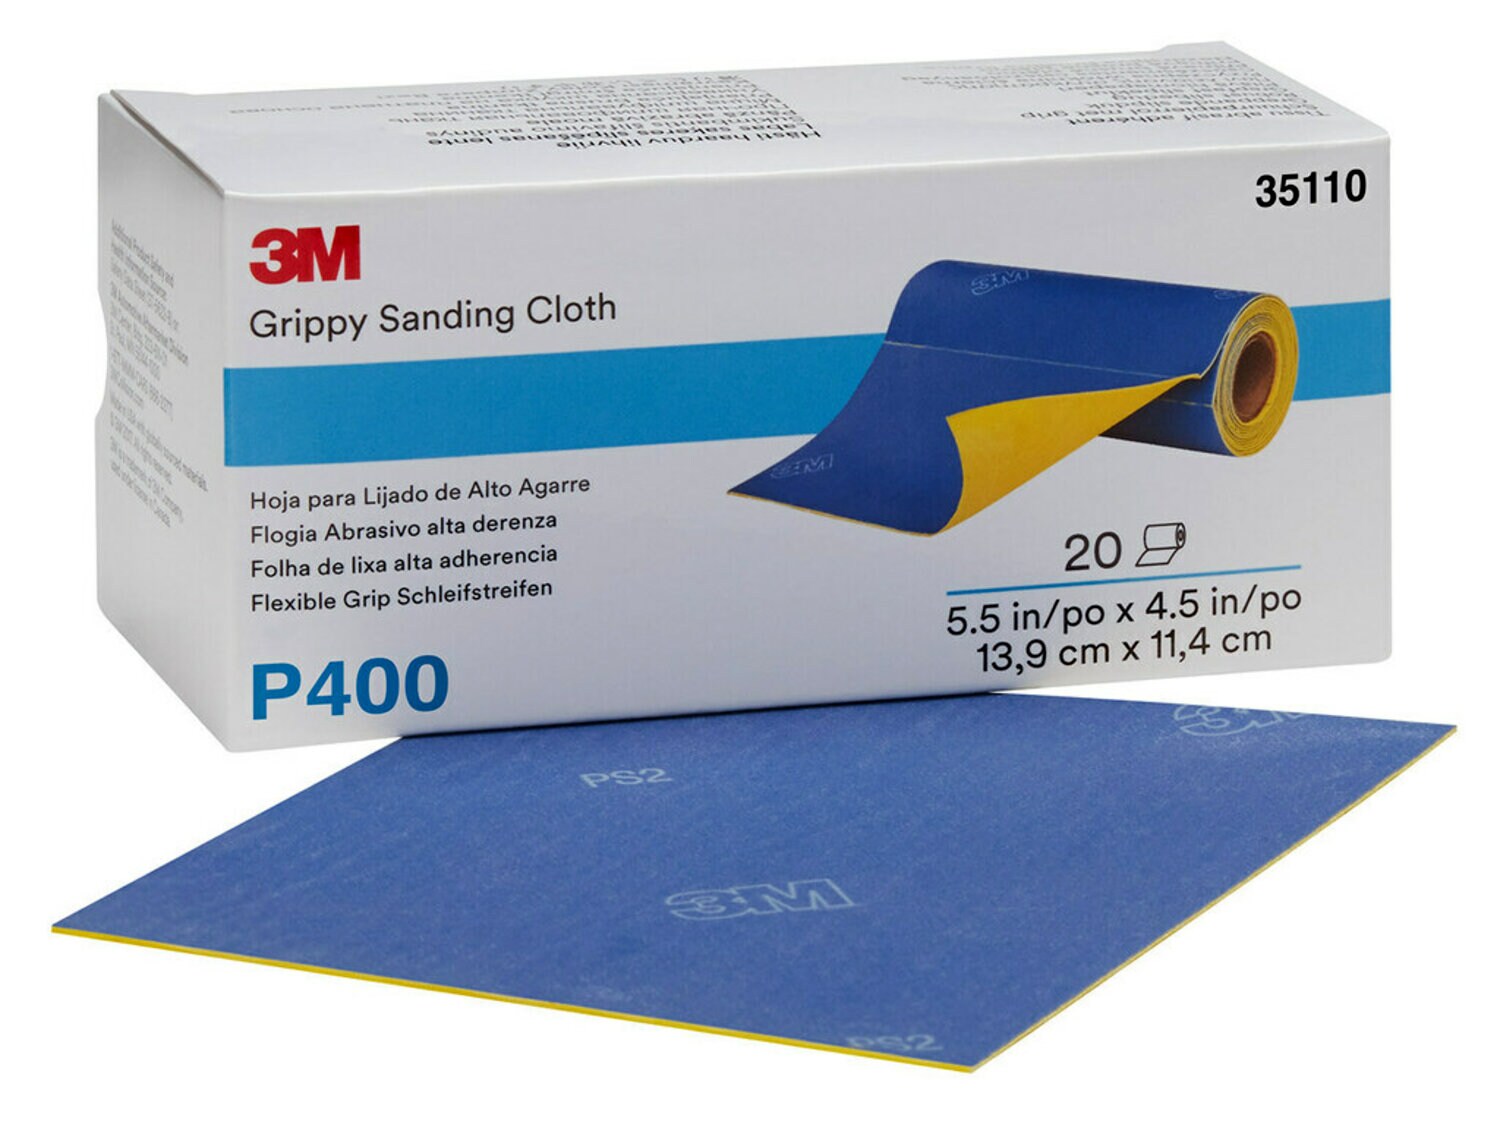 7100142932 - 3M Grippy Sanding Cloth 35110, P400 Grade, 5.5 in x 4.5 in, 20
Sheets/Roll, 4 Rolls/Case